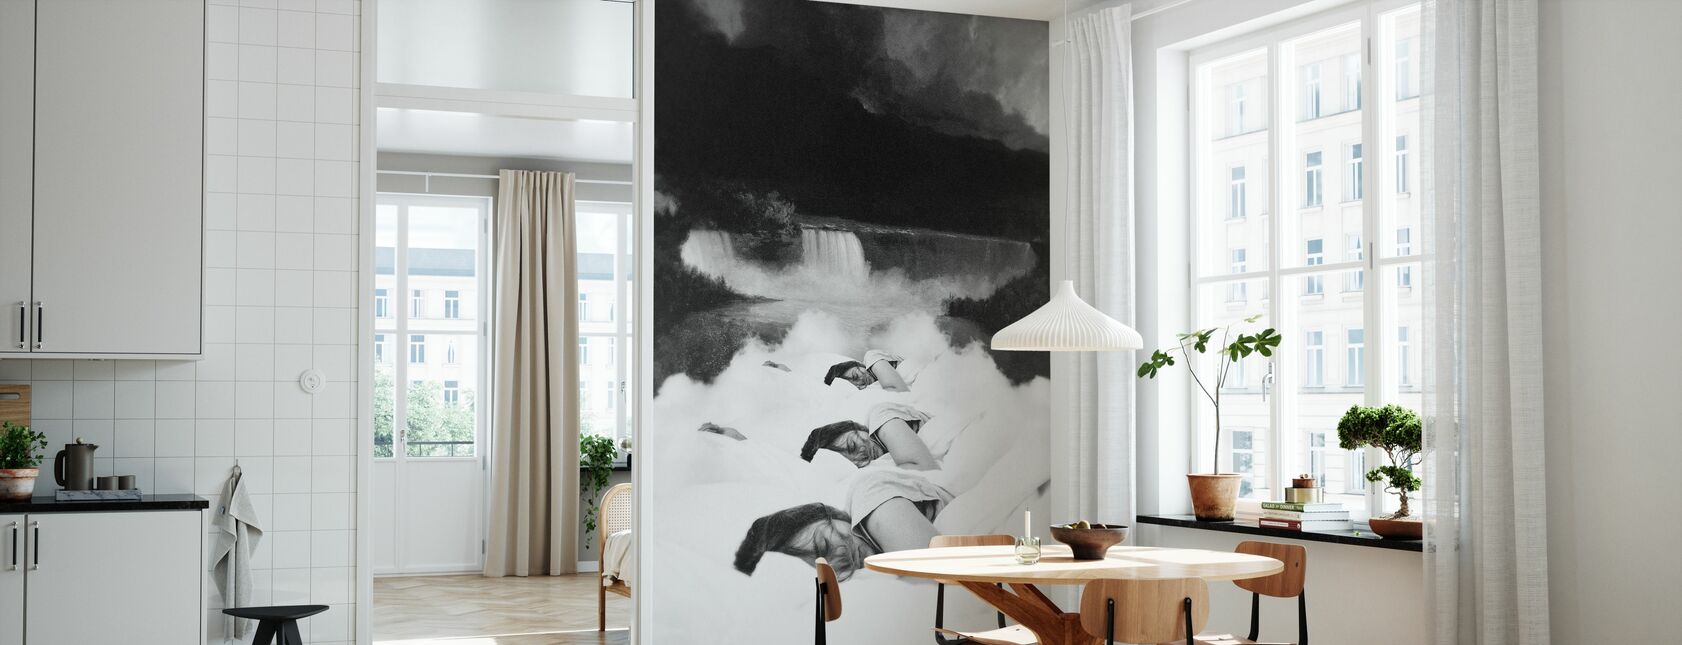 Dream - Wallpaper - Kitchen